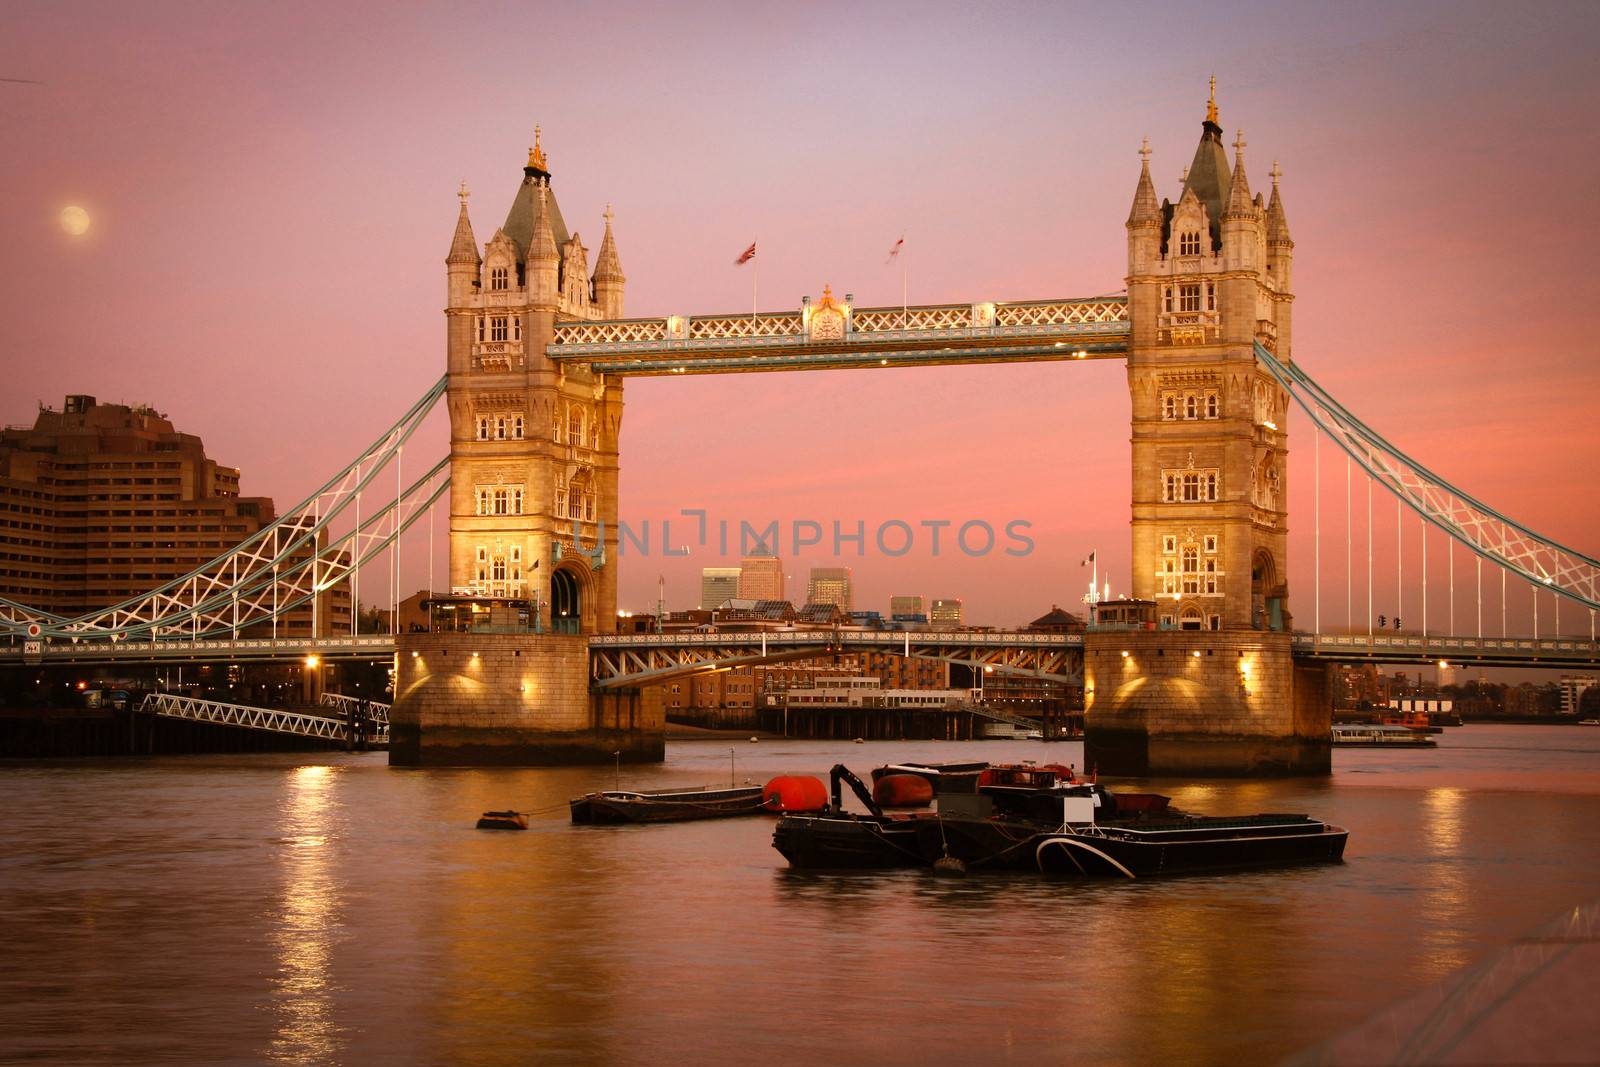 Tower Bridge by CelsoDiniz